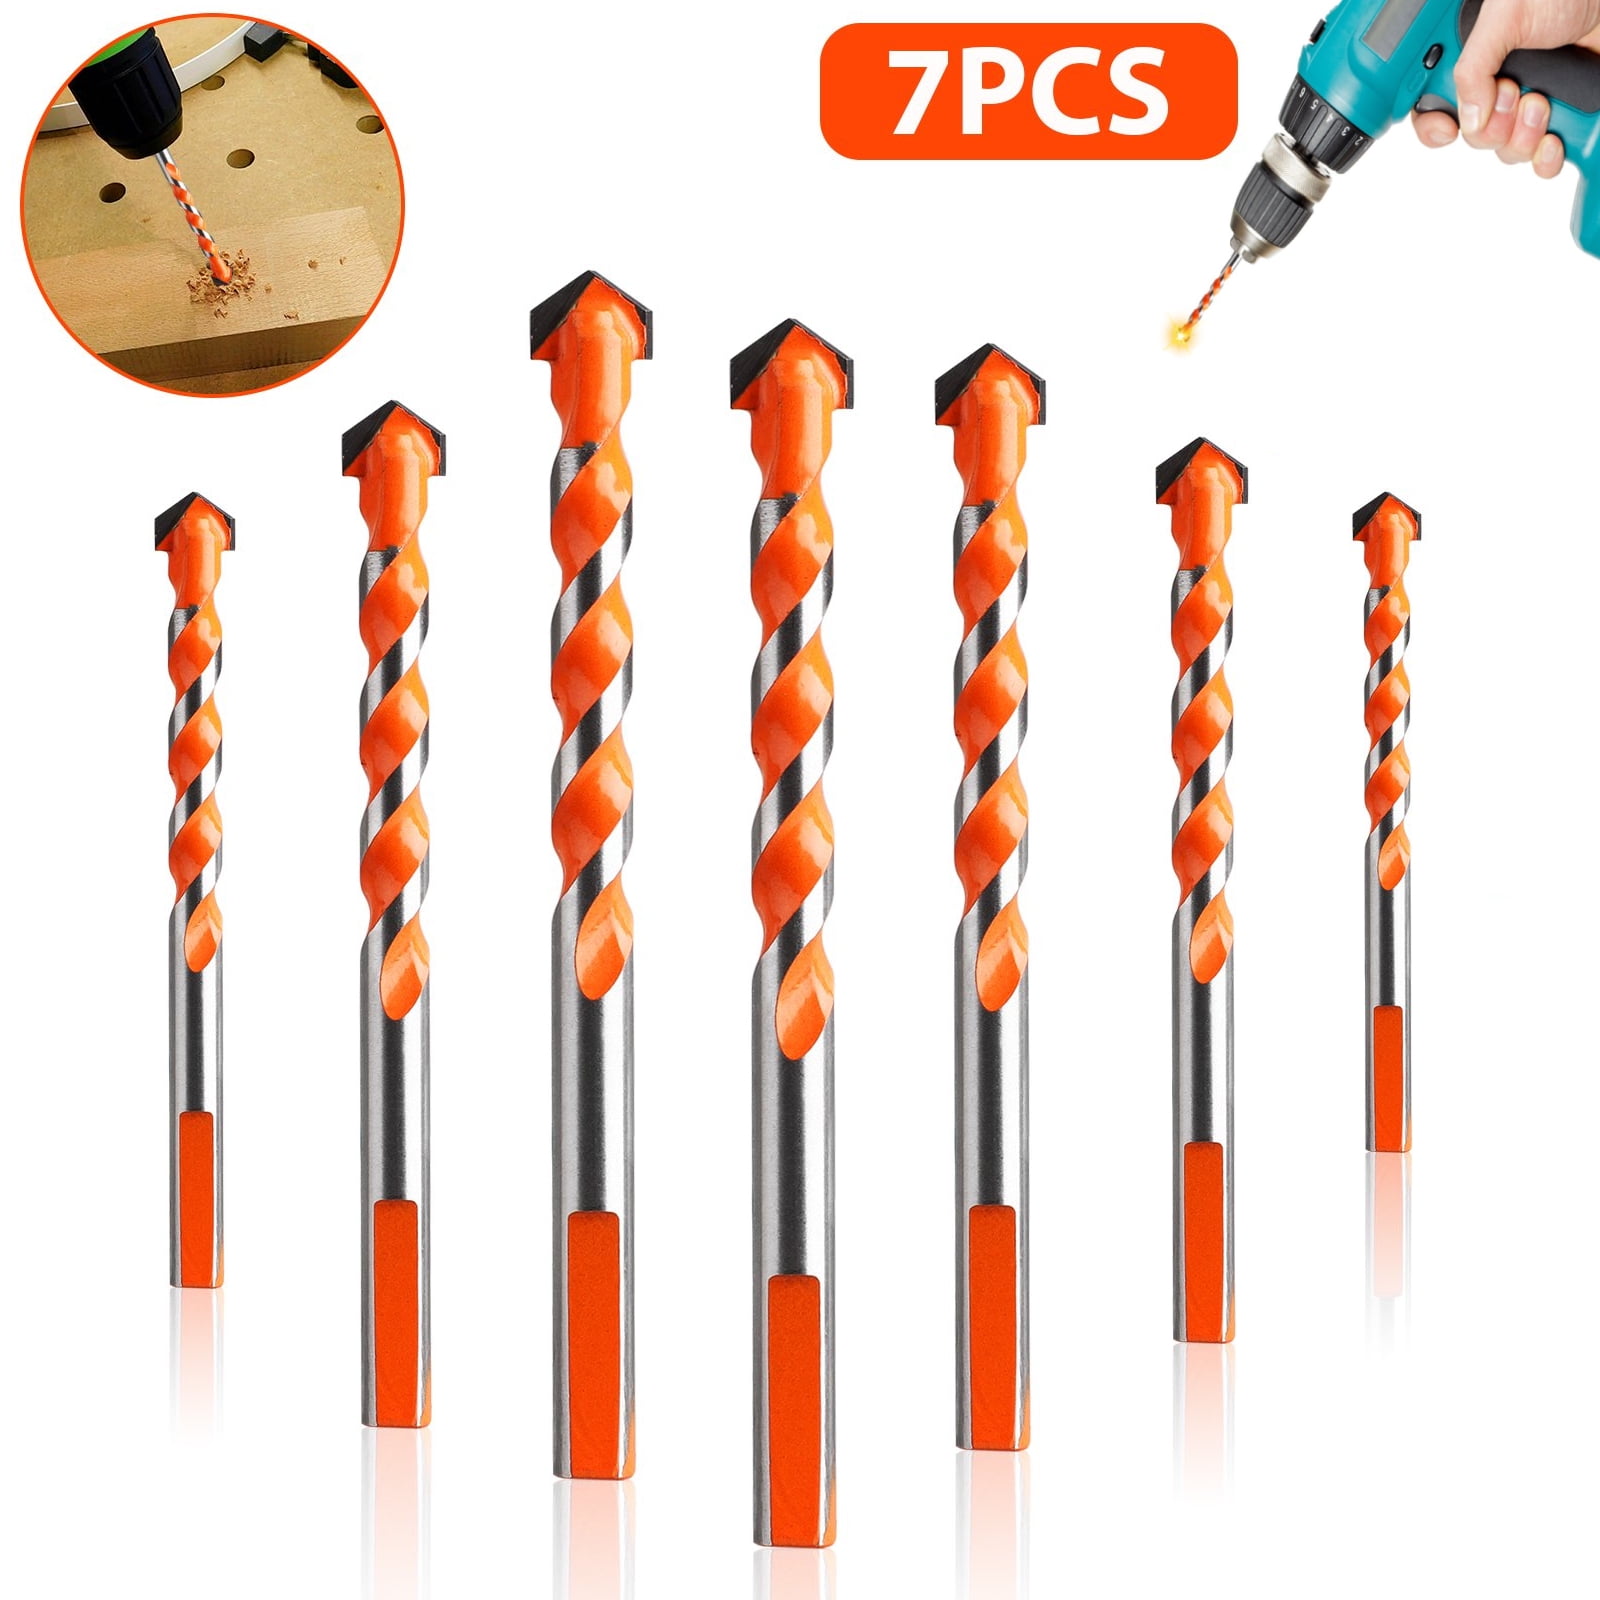 7 PCS Drill Bits Multifunctional Ceramic Wall Glass Punching Hole Working Set 